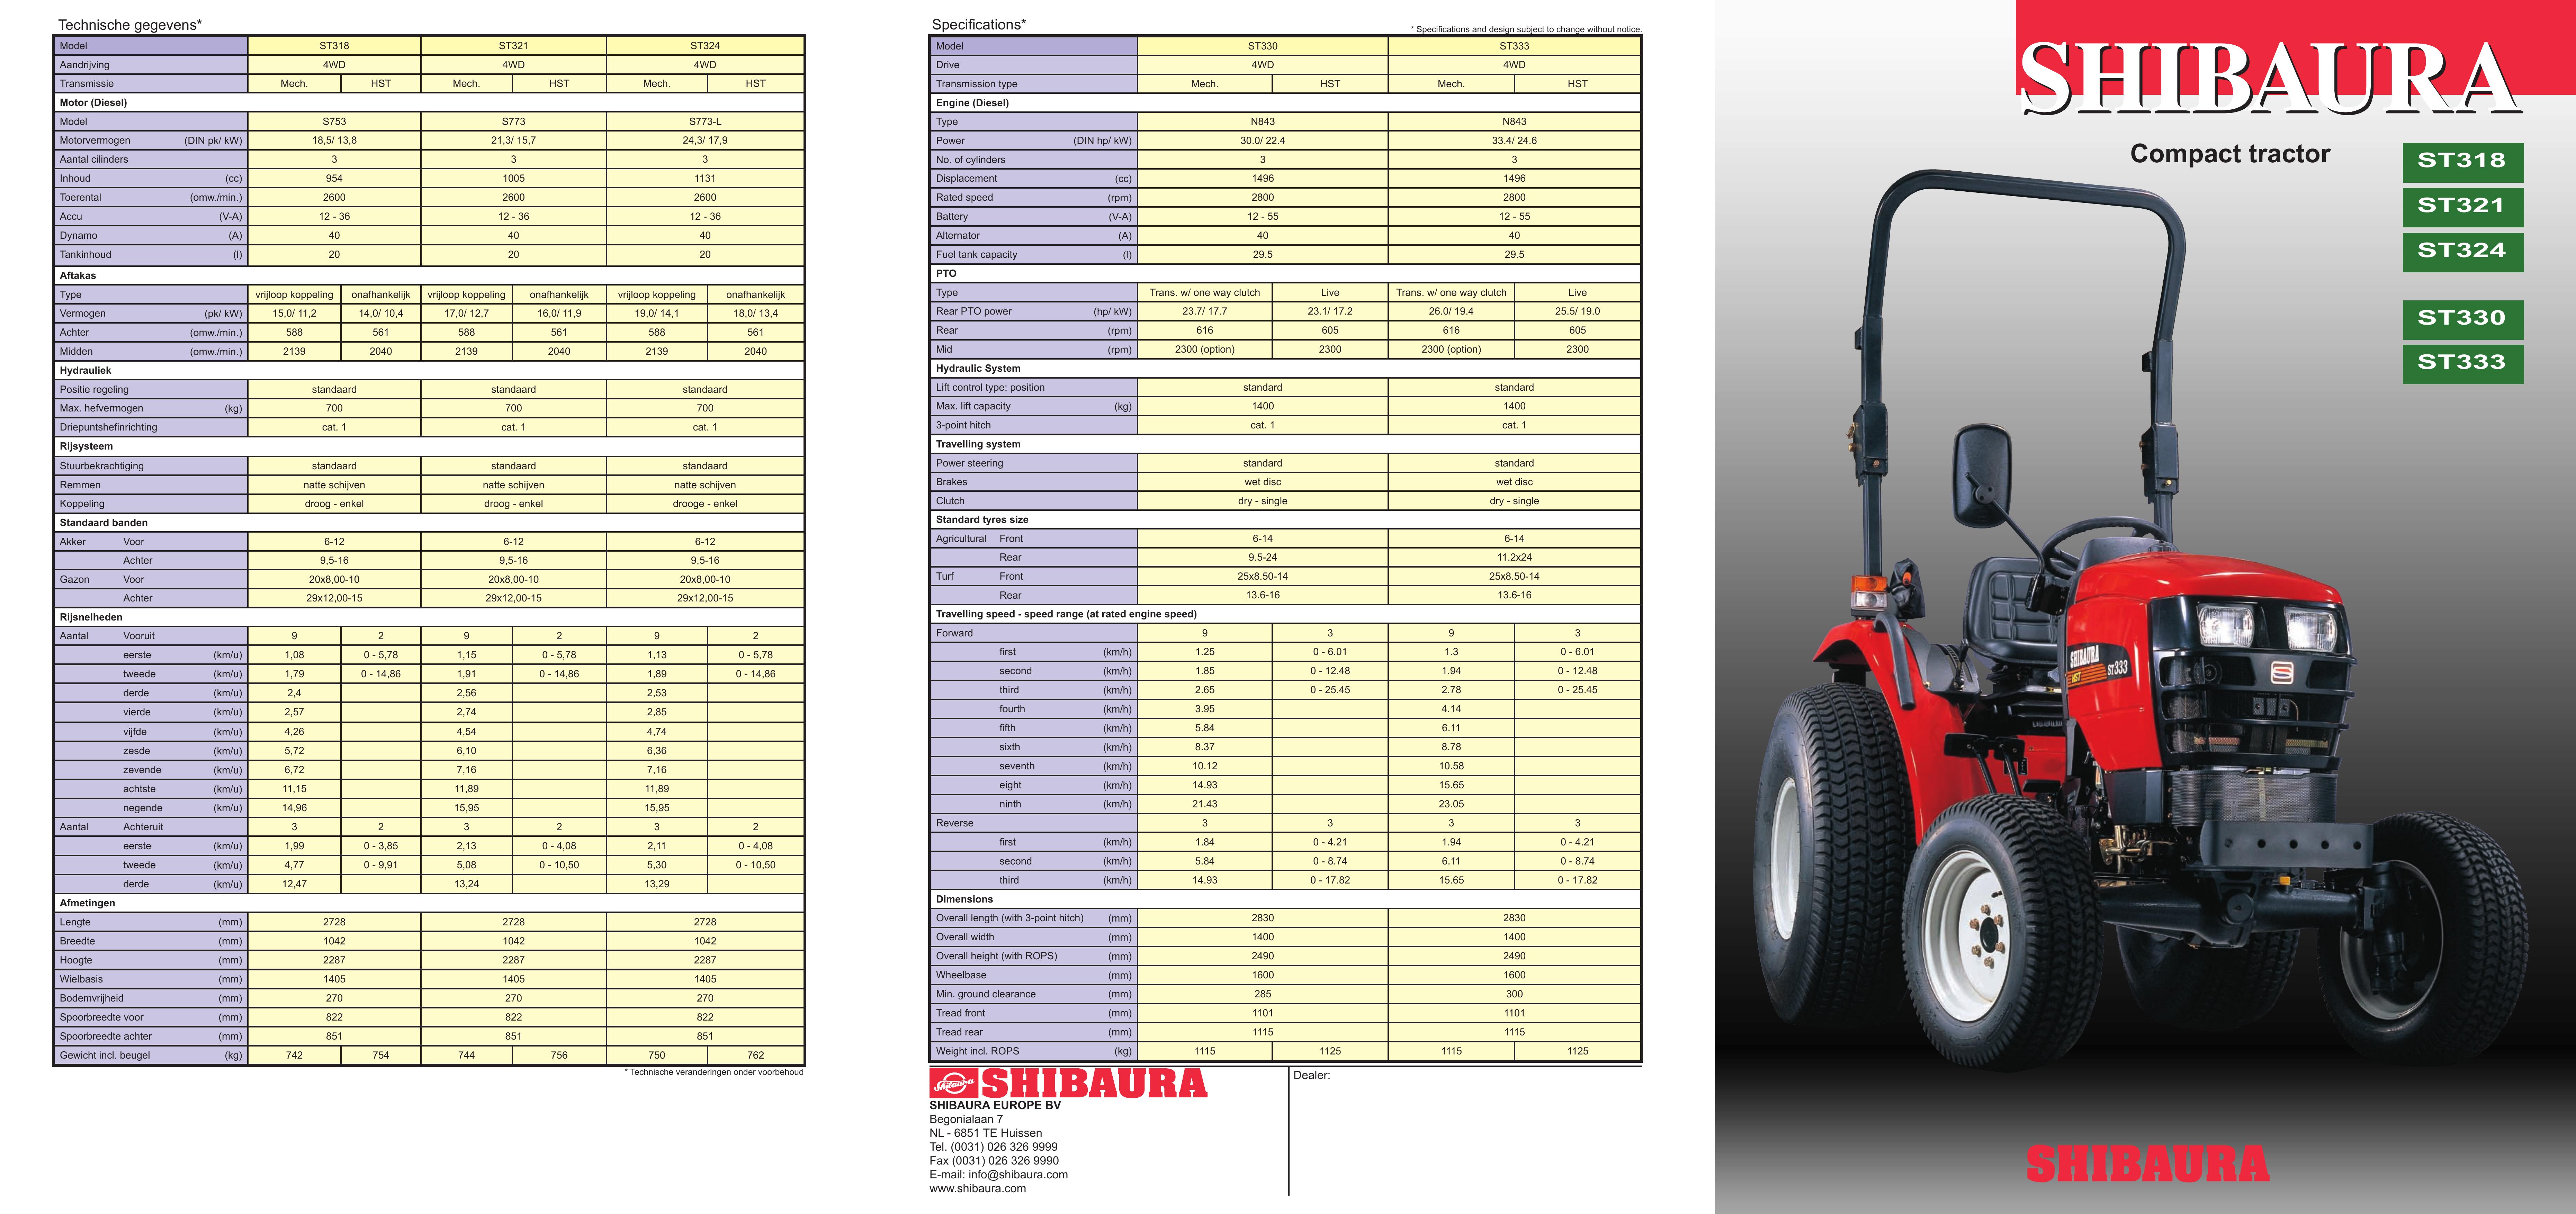 Shibaura ST330 Lawn Mower User Manual